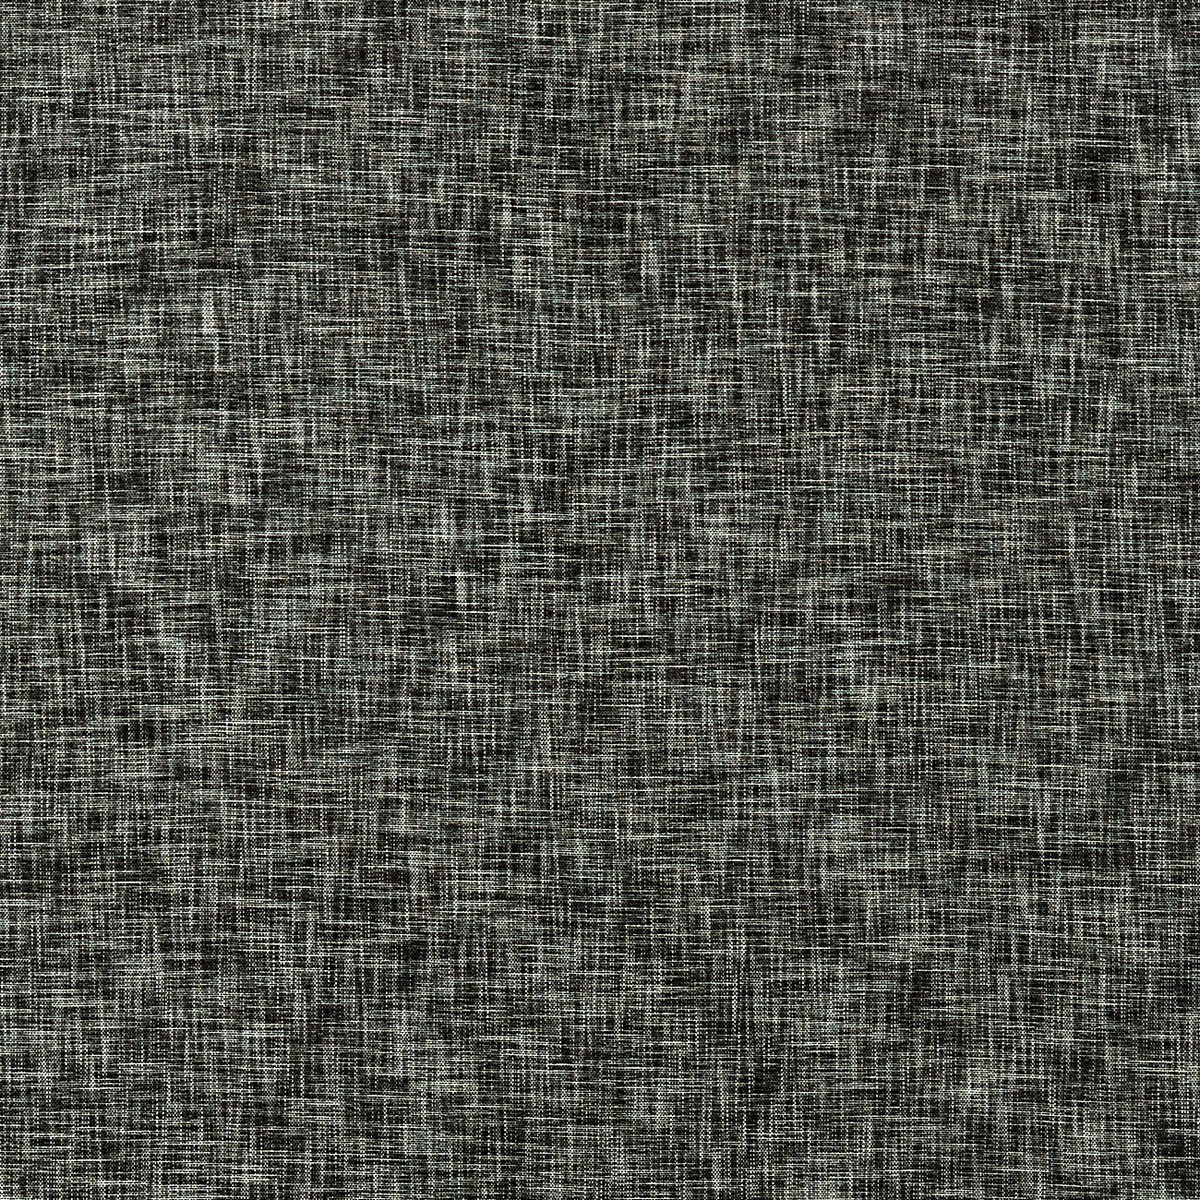 Gaia Charcoal Fabric by Clarke & Clarke